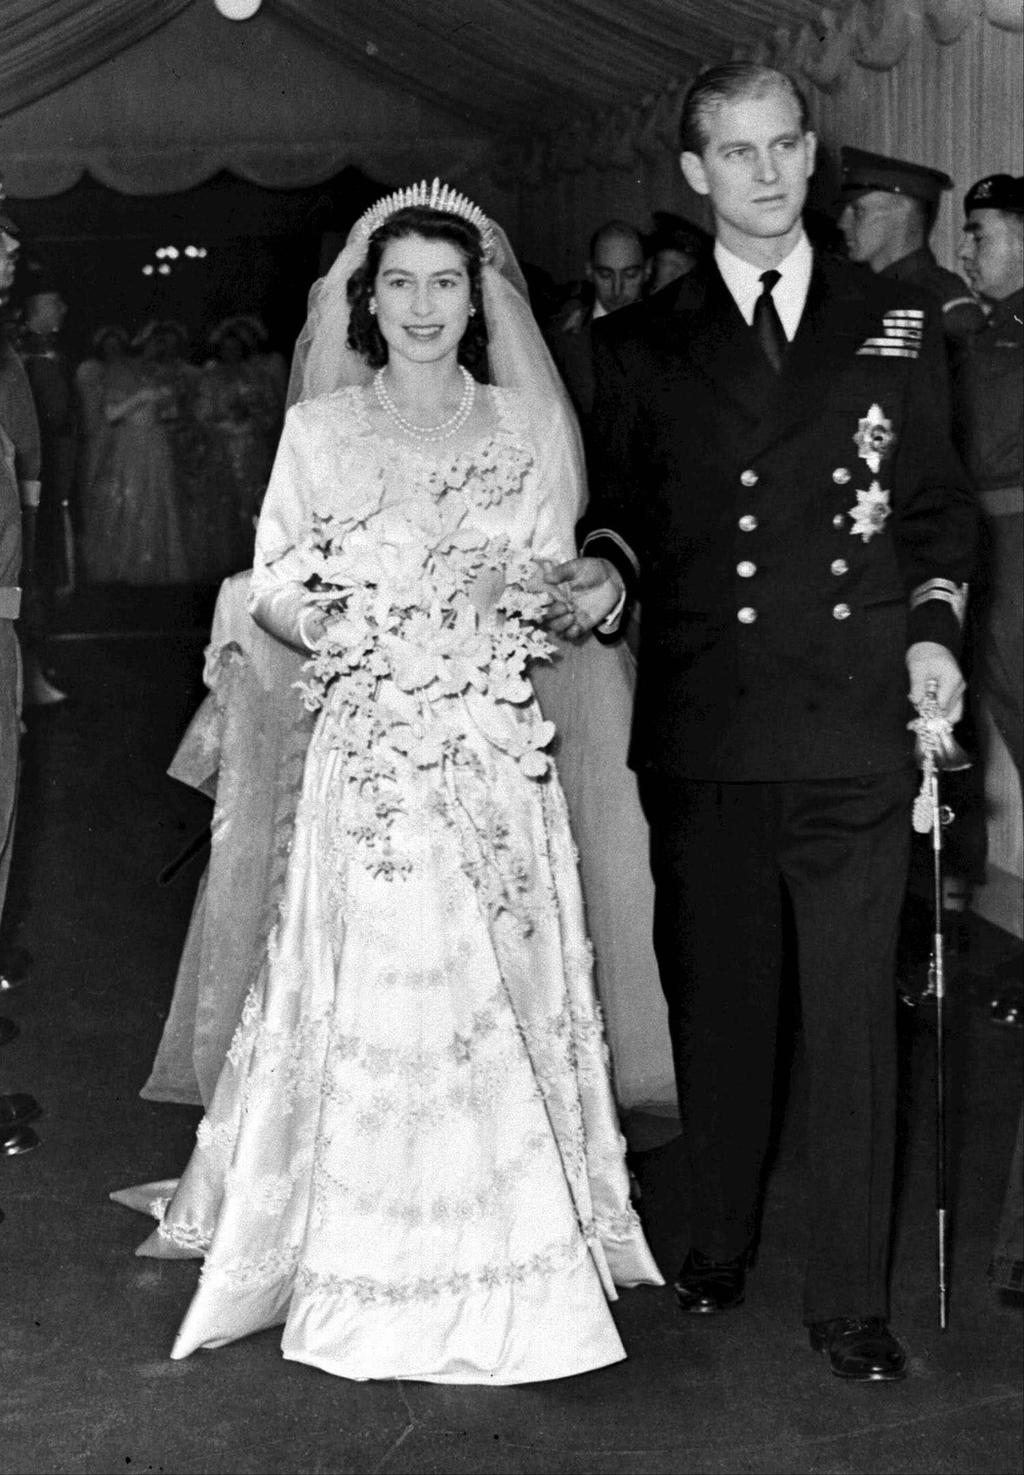 4> Wallis Simpson, 1937, (Fashioninfilms, n.d.-a) <Fig. 5> Queen Elizabeth II wedding dress, 1947 (Royal.gov, n.d.) 면서 엘레강스한 라인이 조합된 웨딩드레스를 입고 대중들의 관심을 모았다. <Fig. 6>은 1956년 모나코의 왕비가 된 배우 그레 이스 켈리 (Grace Patricia Kelly)의 웨딩드레스로 1950년대의 유행인 심플한 아우어 글라스(hourglass) 실루엣을 보여주고 있다(Grace Kelly wedding dress, n.